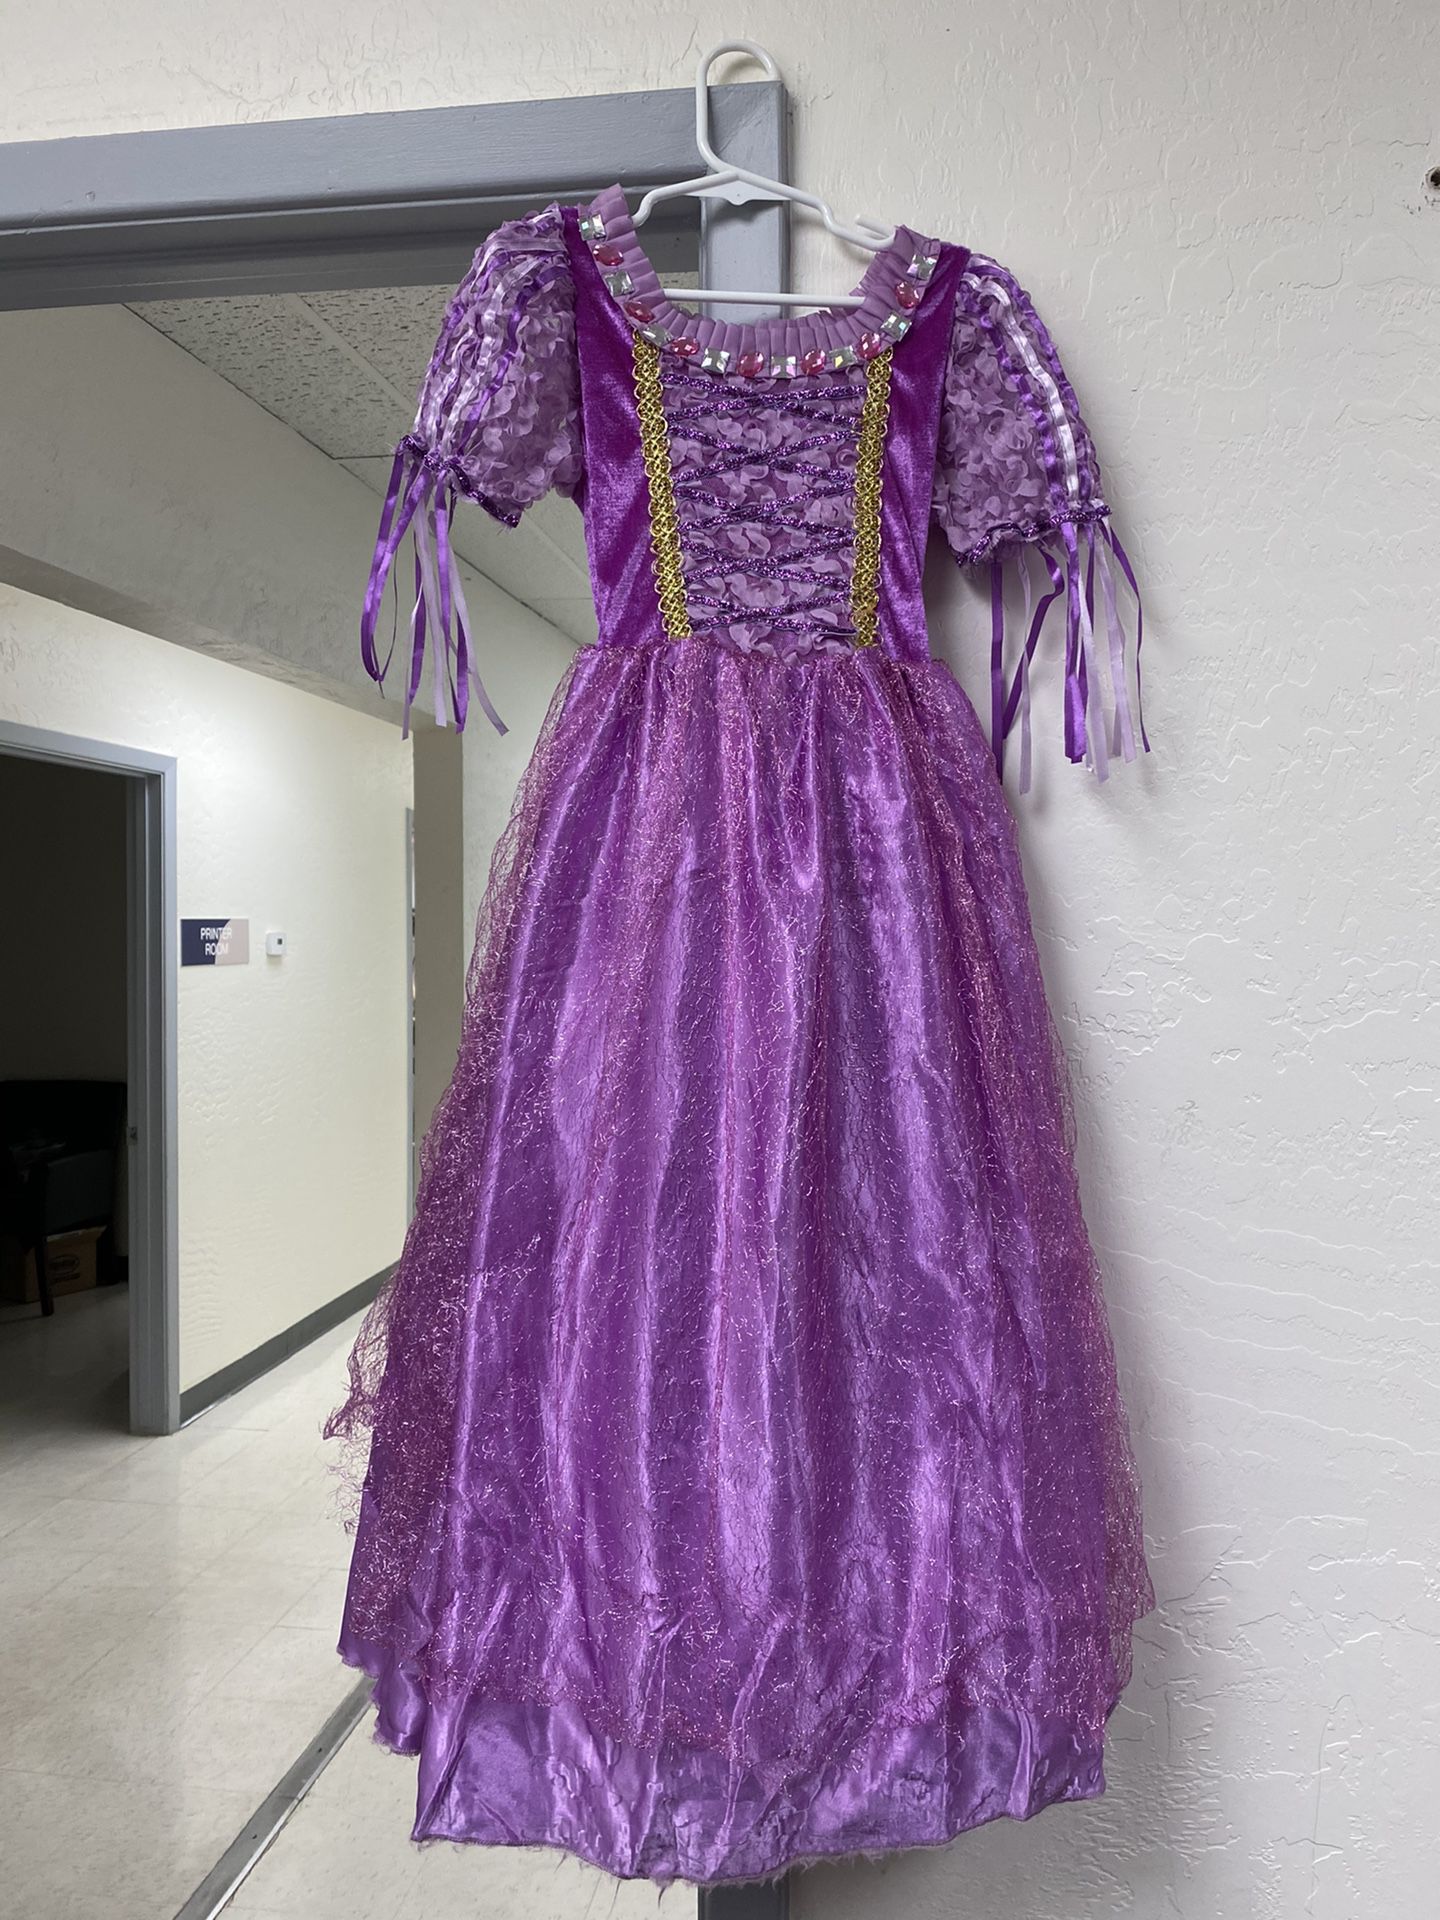 Disney Princess Rapunzel Dress - 4T to 5T